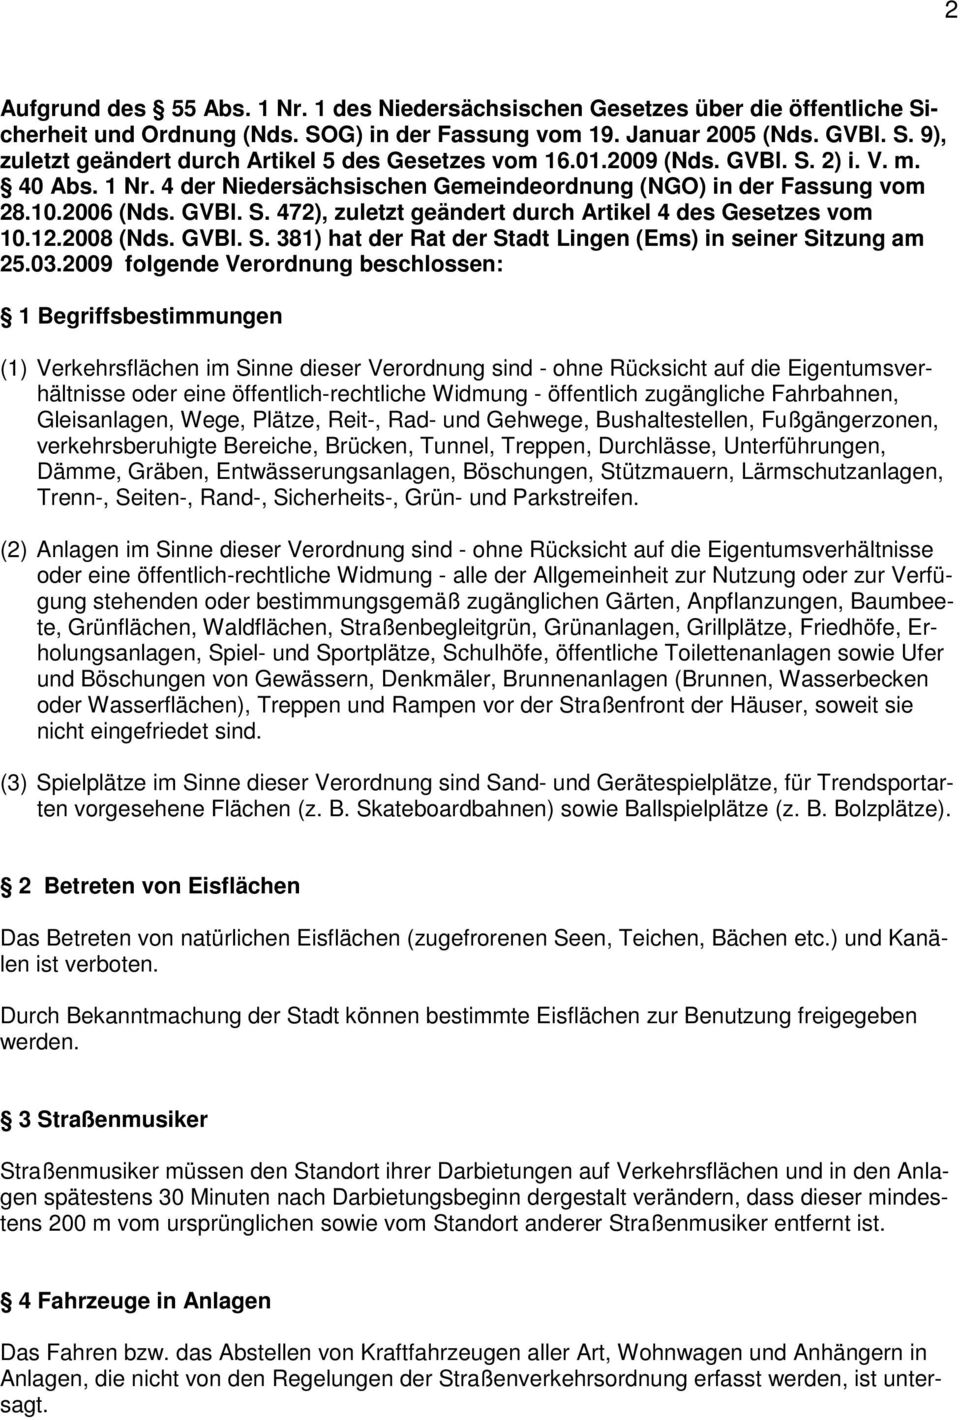 12.2008 (Nds. GVBl. S. 381) hat der Rat der Stadt Lingen (Ems) in seiner Sitzung am 25.03.